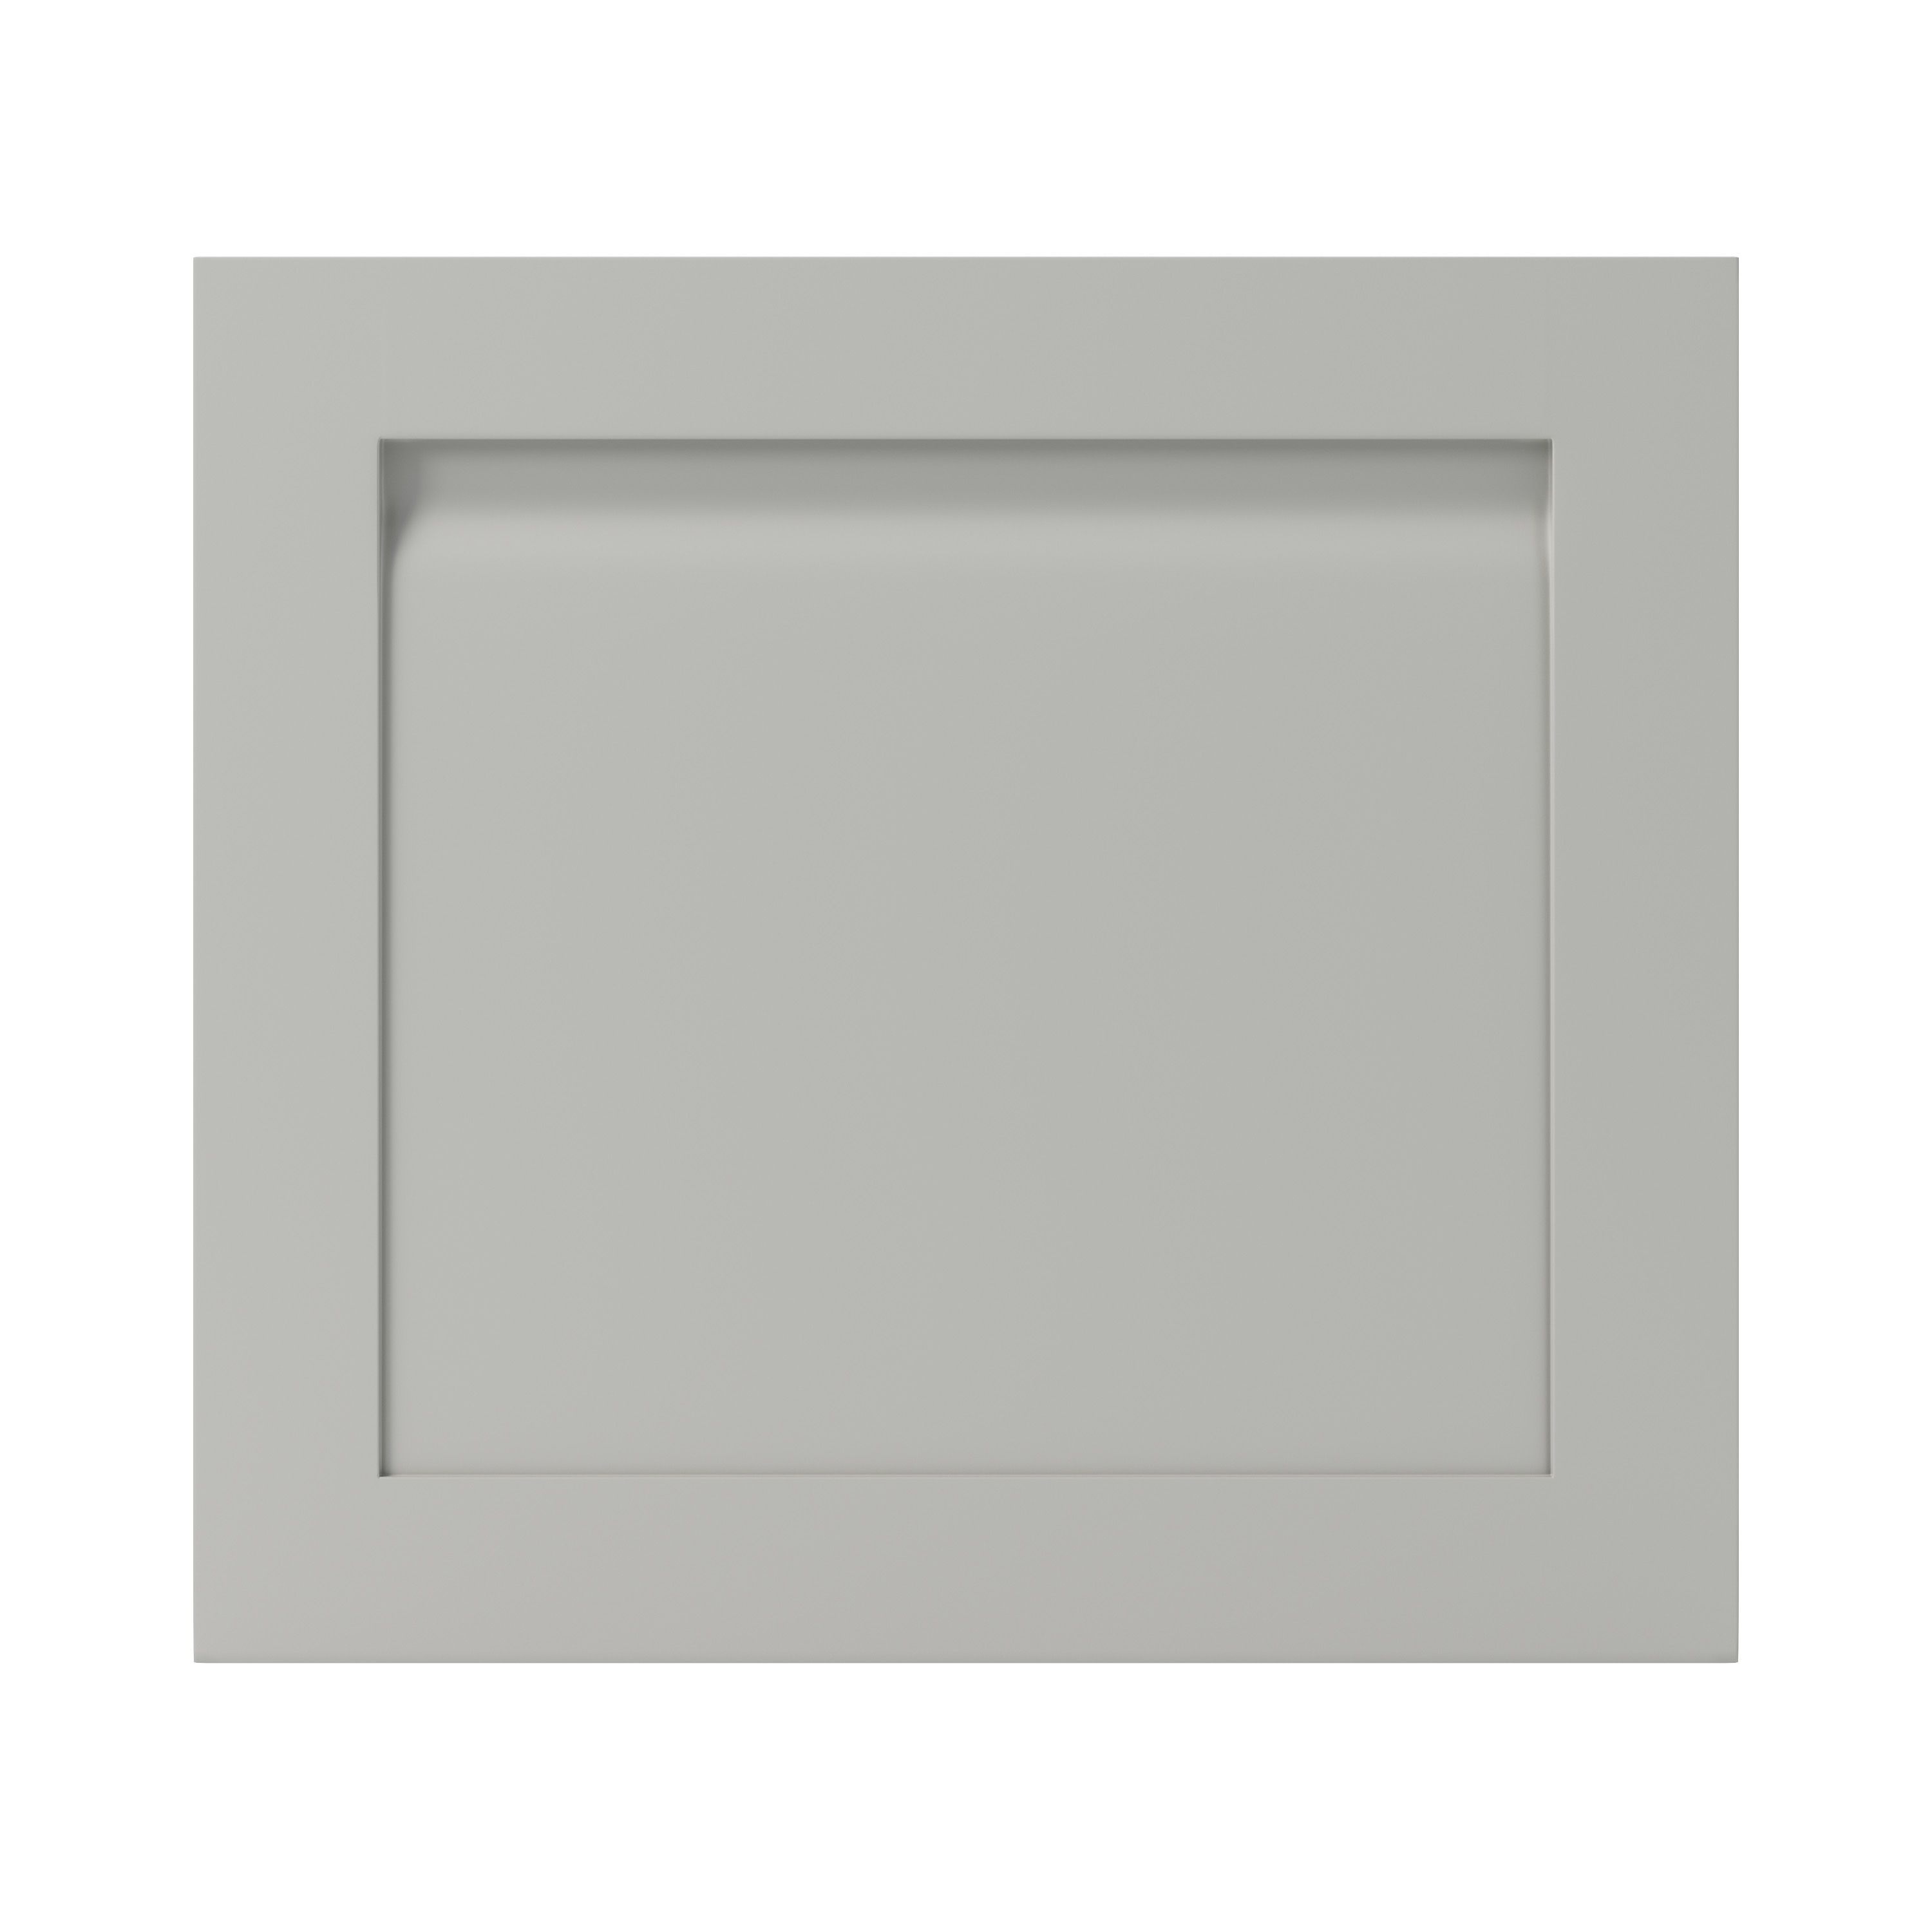 GoodHome Garcinia Matt stone integrated handle shaker Appliance Cabinet door (W)600mm (H)543mm (T)20mm